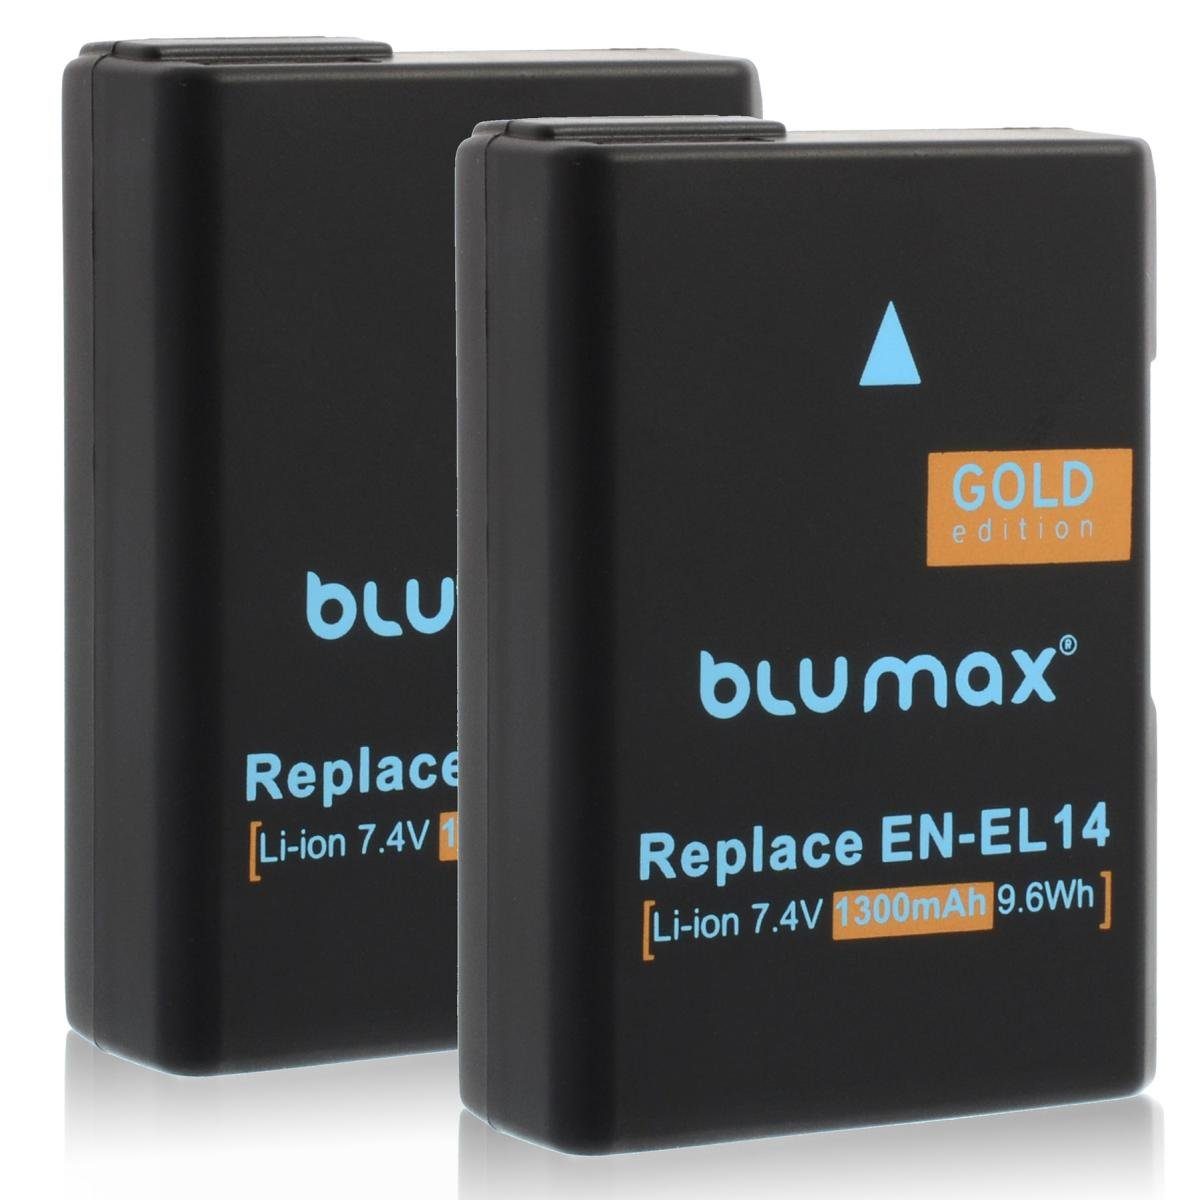 Blumax Set mit Lader für 1300 (7,4V) EL-EL14 mAh Kamera-Akku Nikon